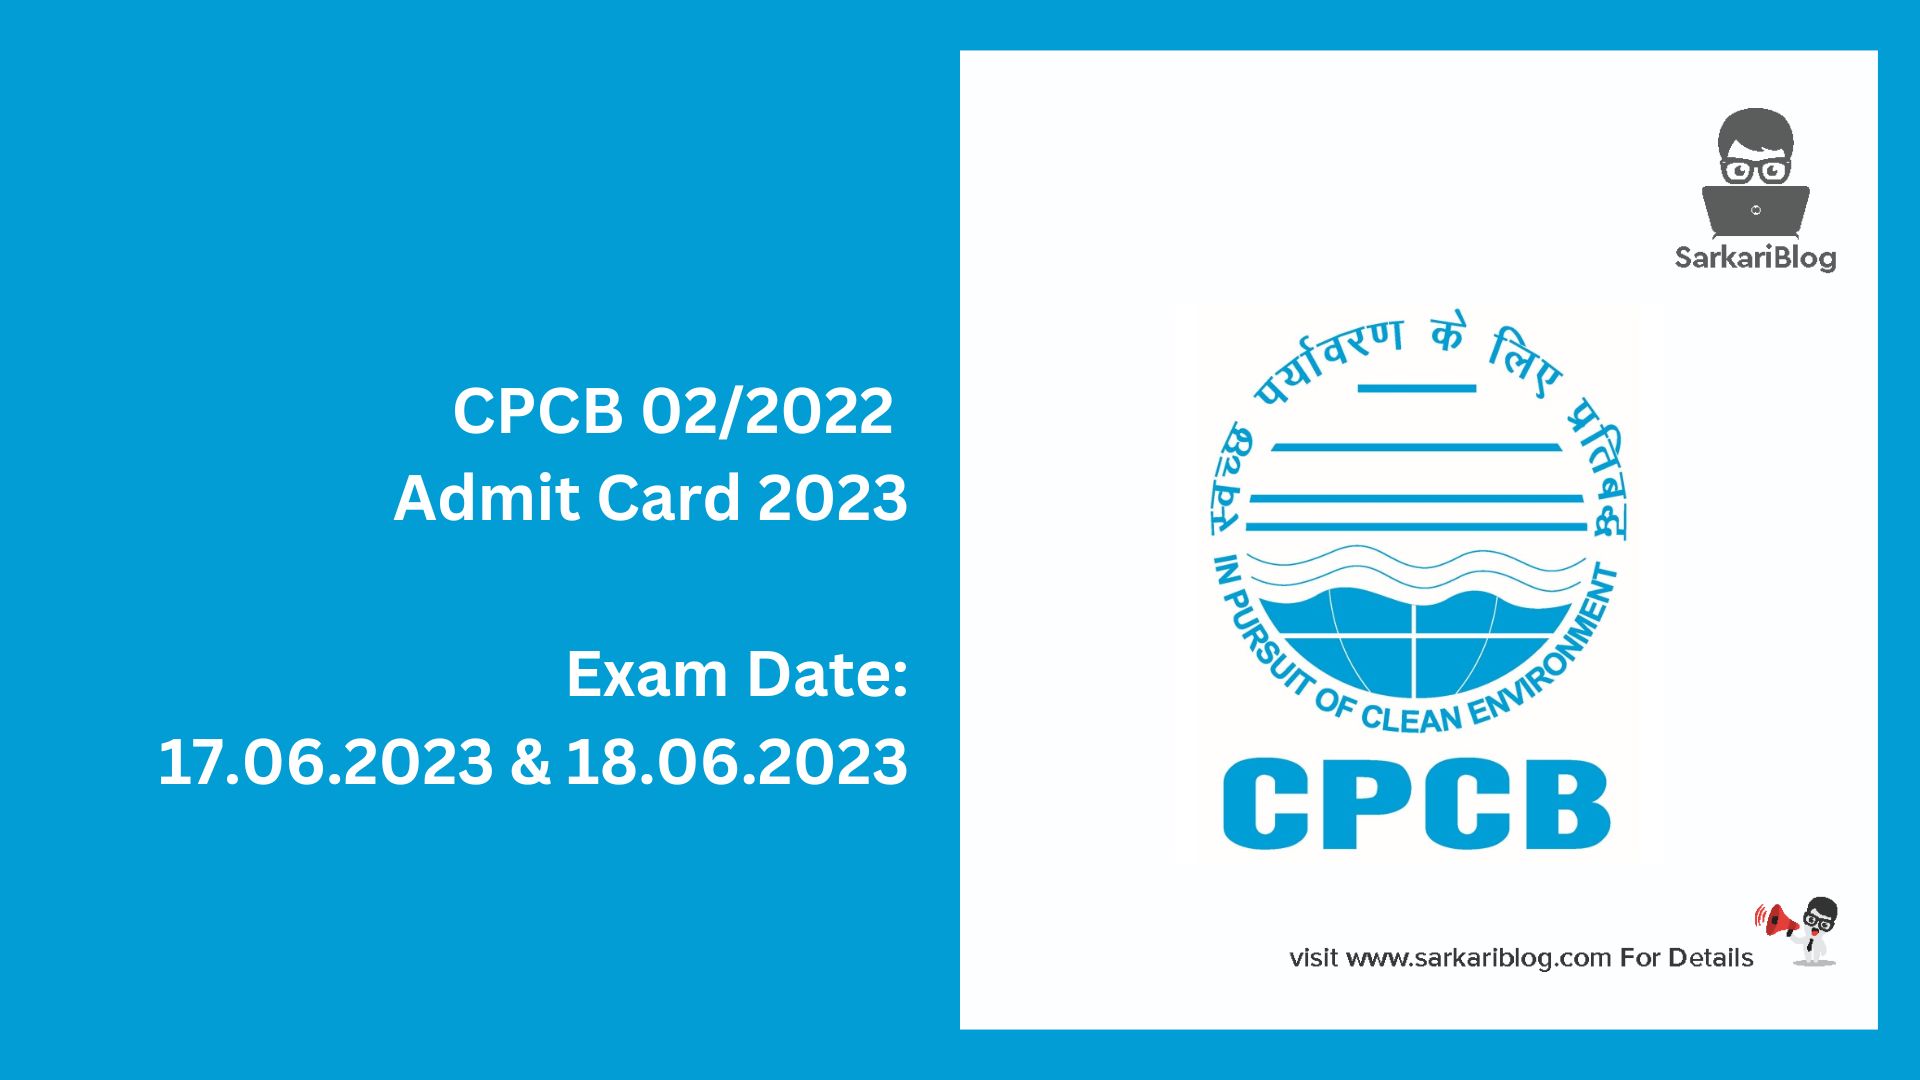 CPCB 02/2022 Admit Card 2023